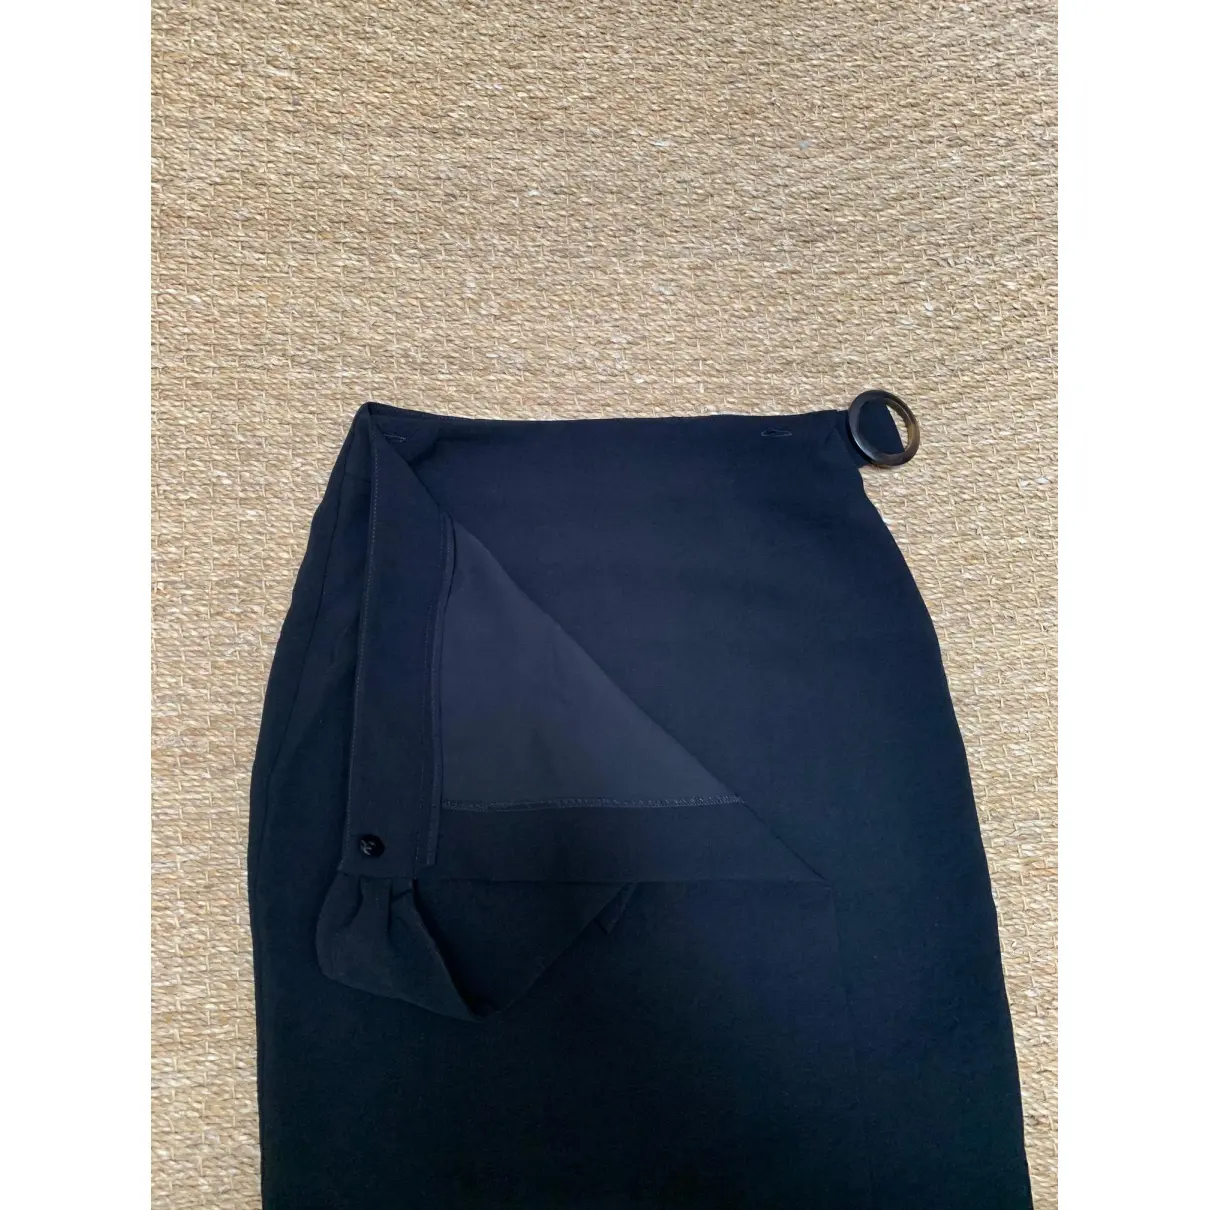 Spring Summer 2019 mid-length skirt Sézane